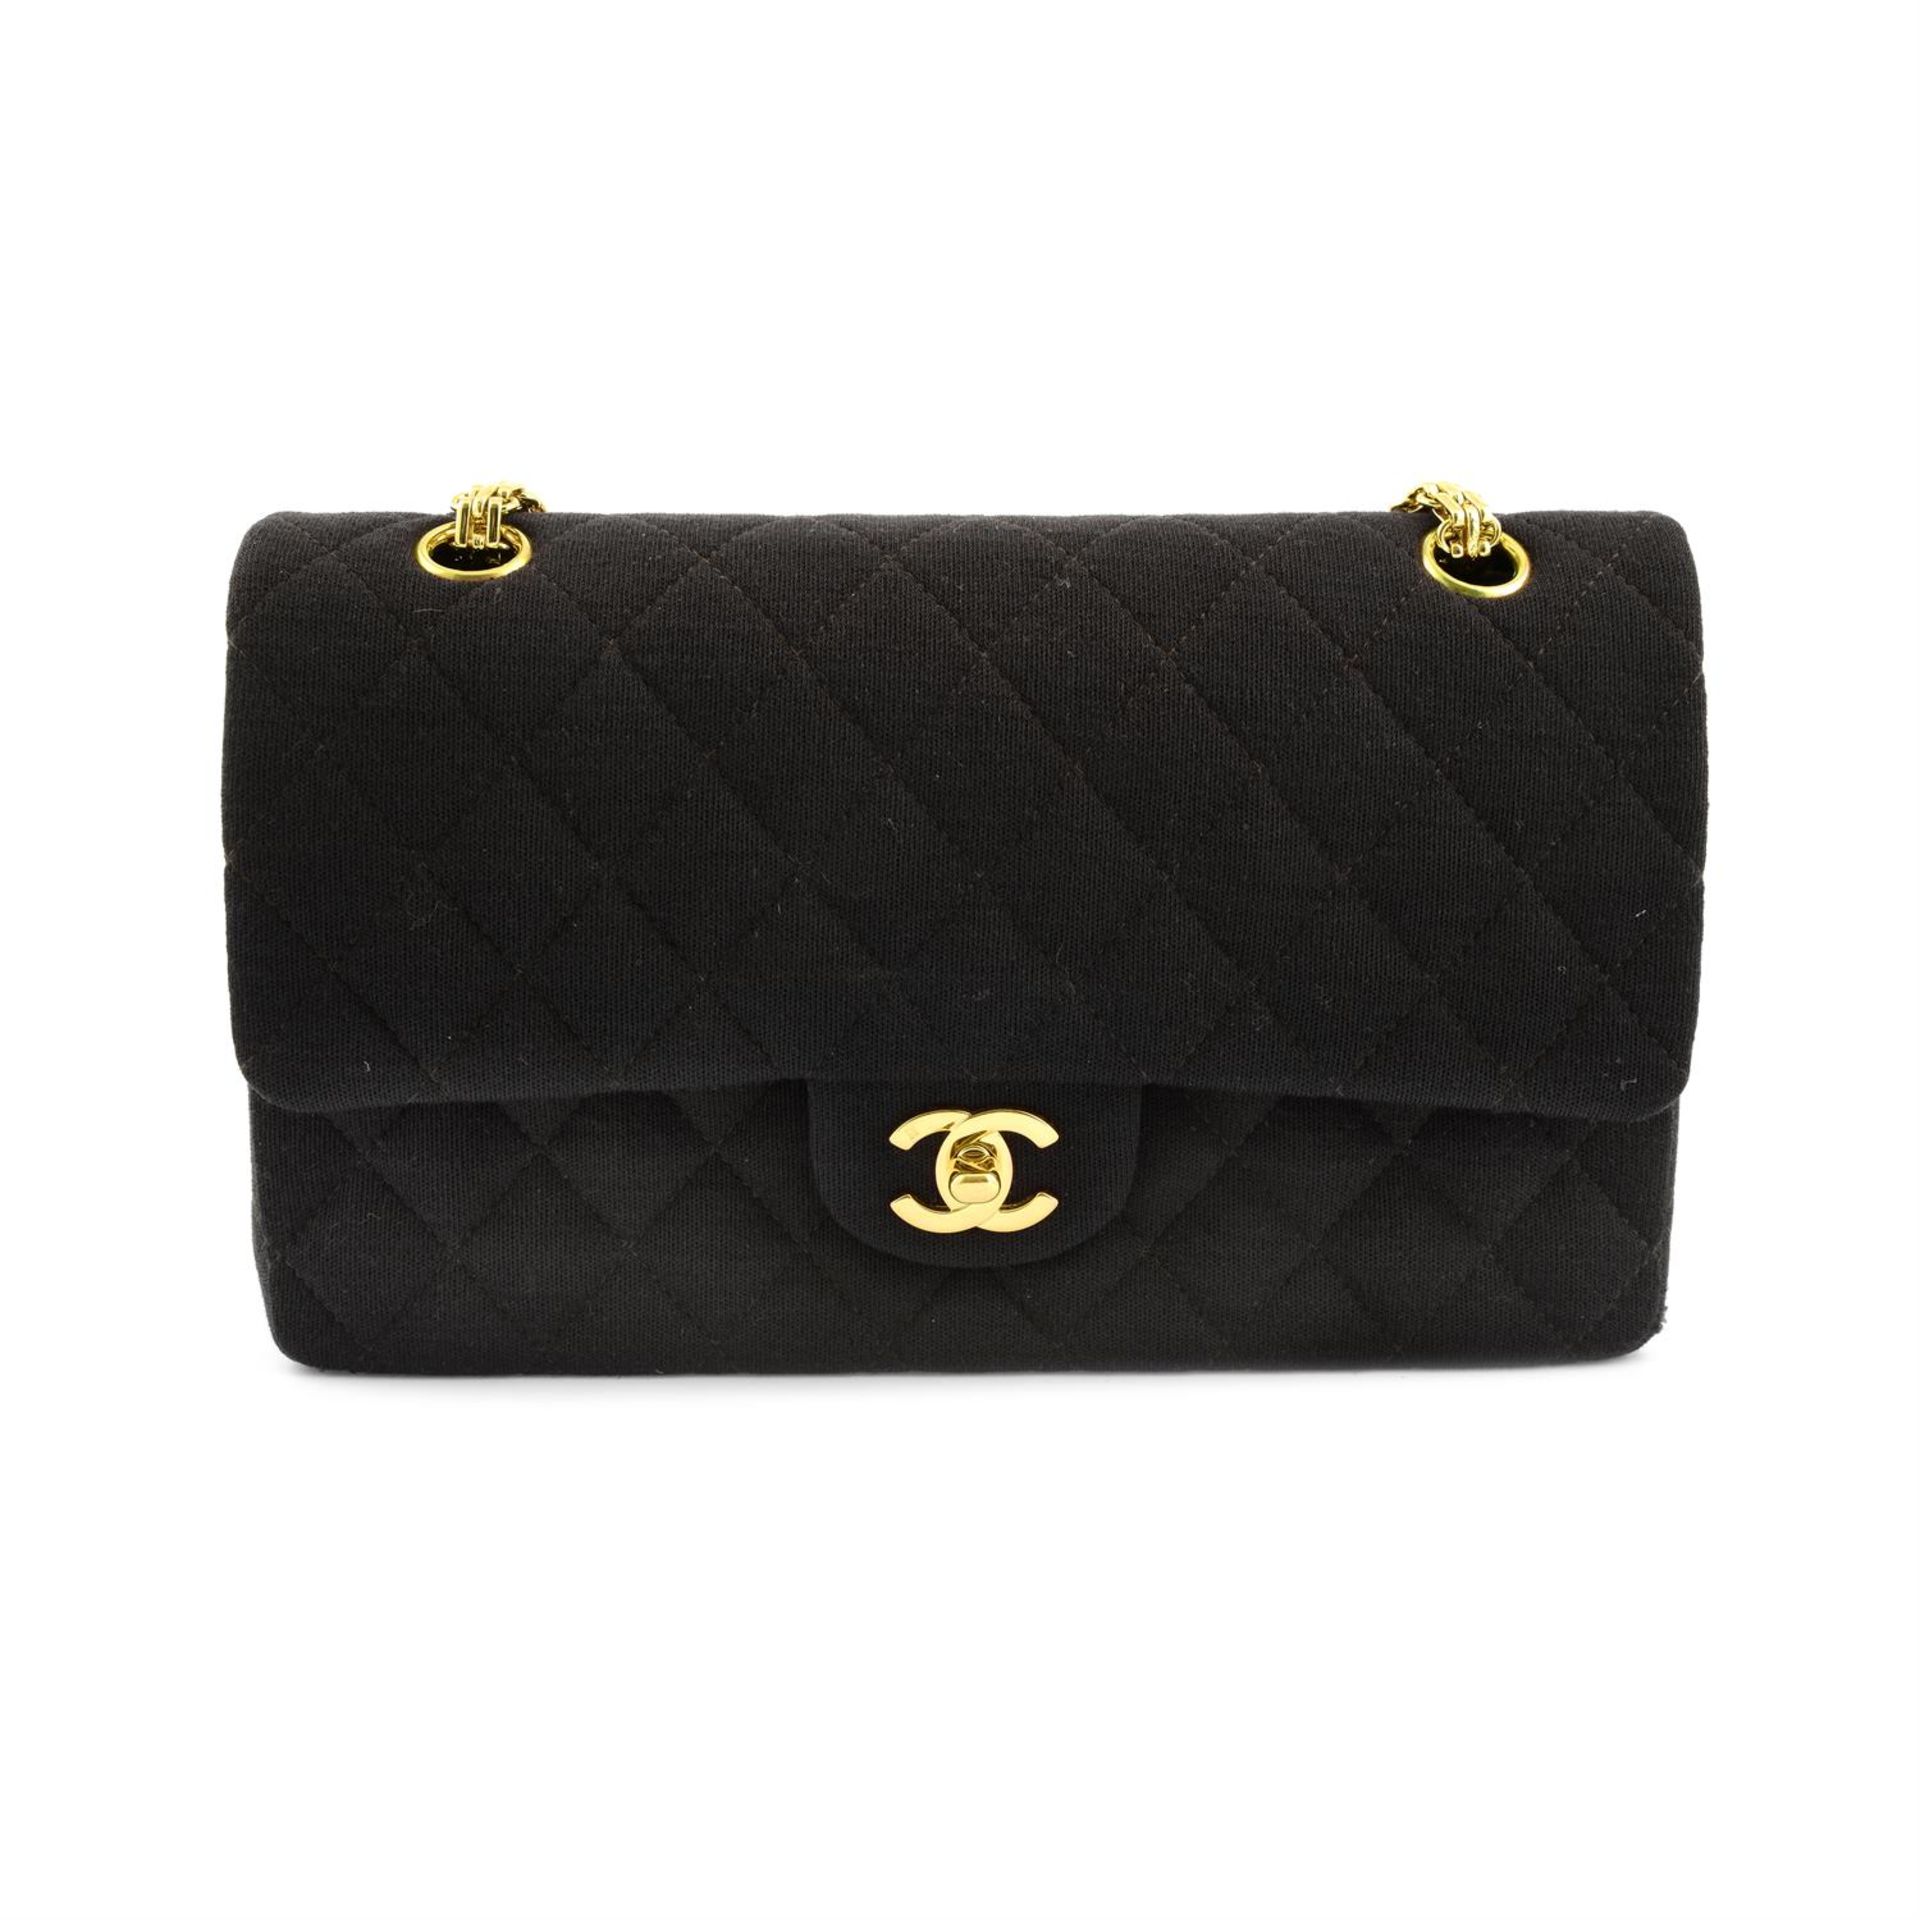 CHANEL - a Jersey fabric Classic double flap handbag.